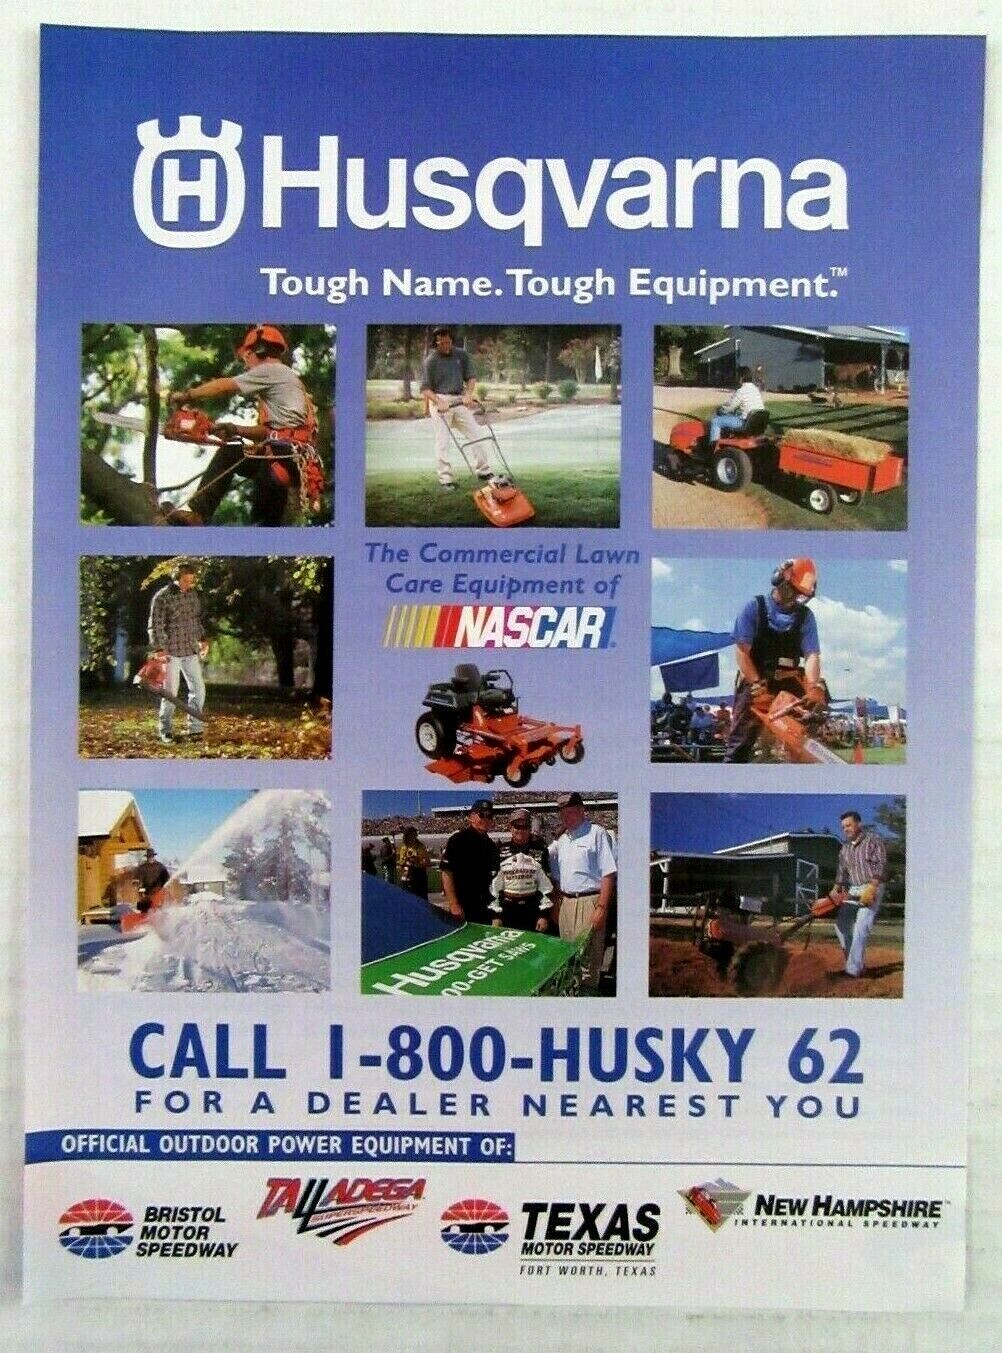 2000 HUSQVARNA Magazine Ad - Commercial Lawn Care Equipment of NASCAR